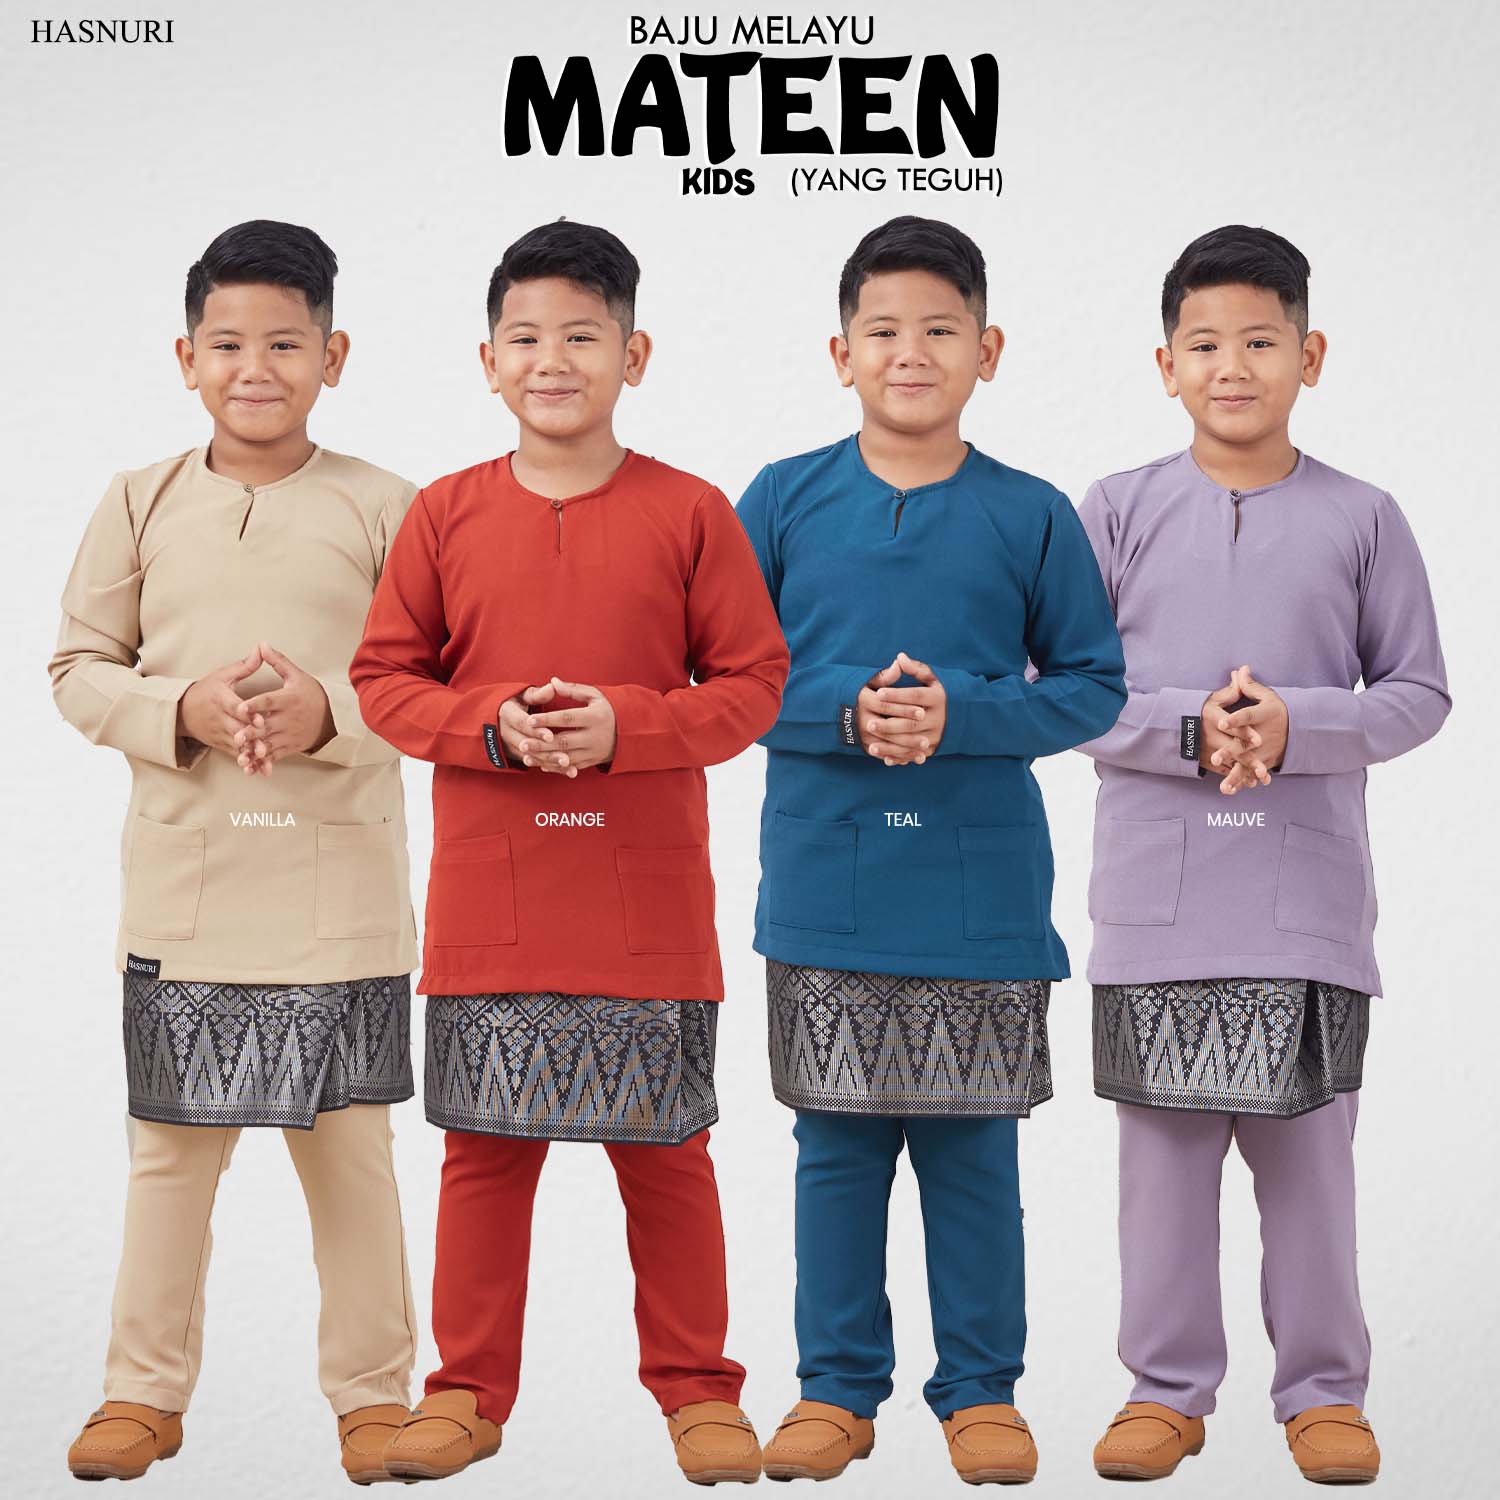 Baju Melayu Mateen Kids - Olive Green